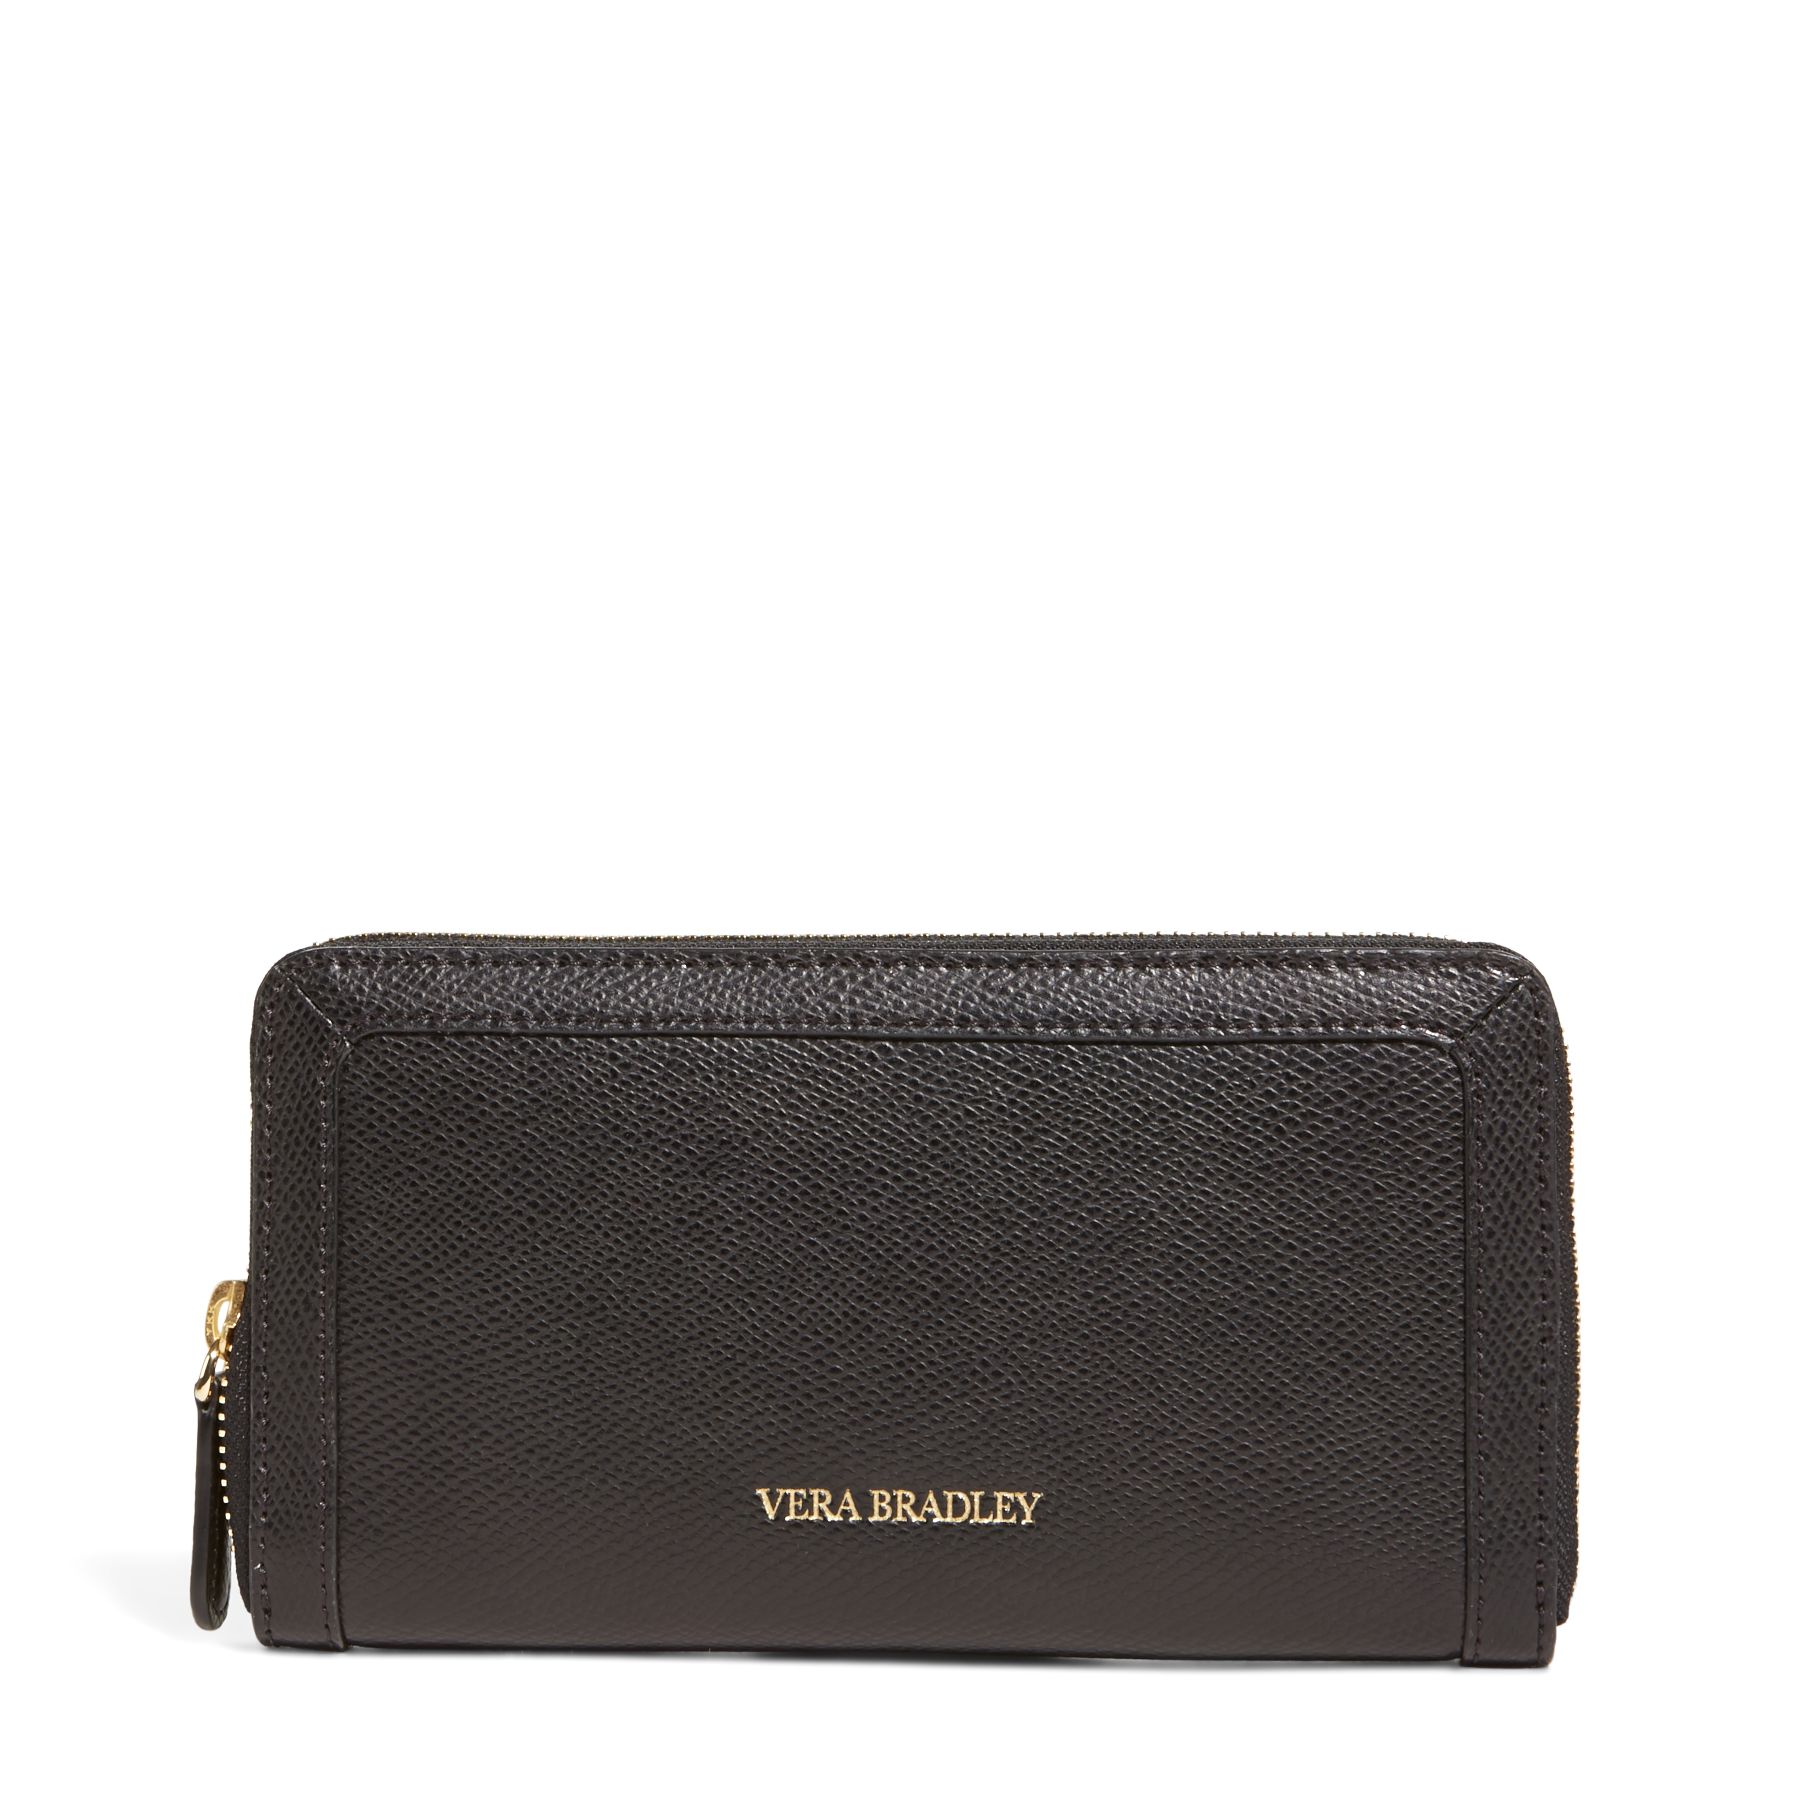 Vera Bradley Leather Georgia Wallet | eBay